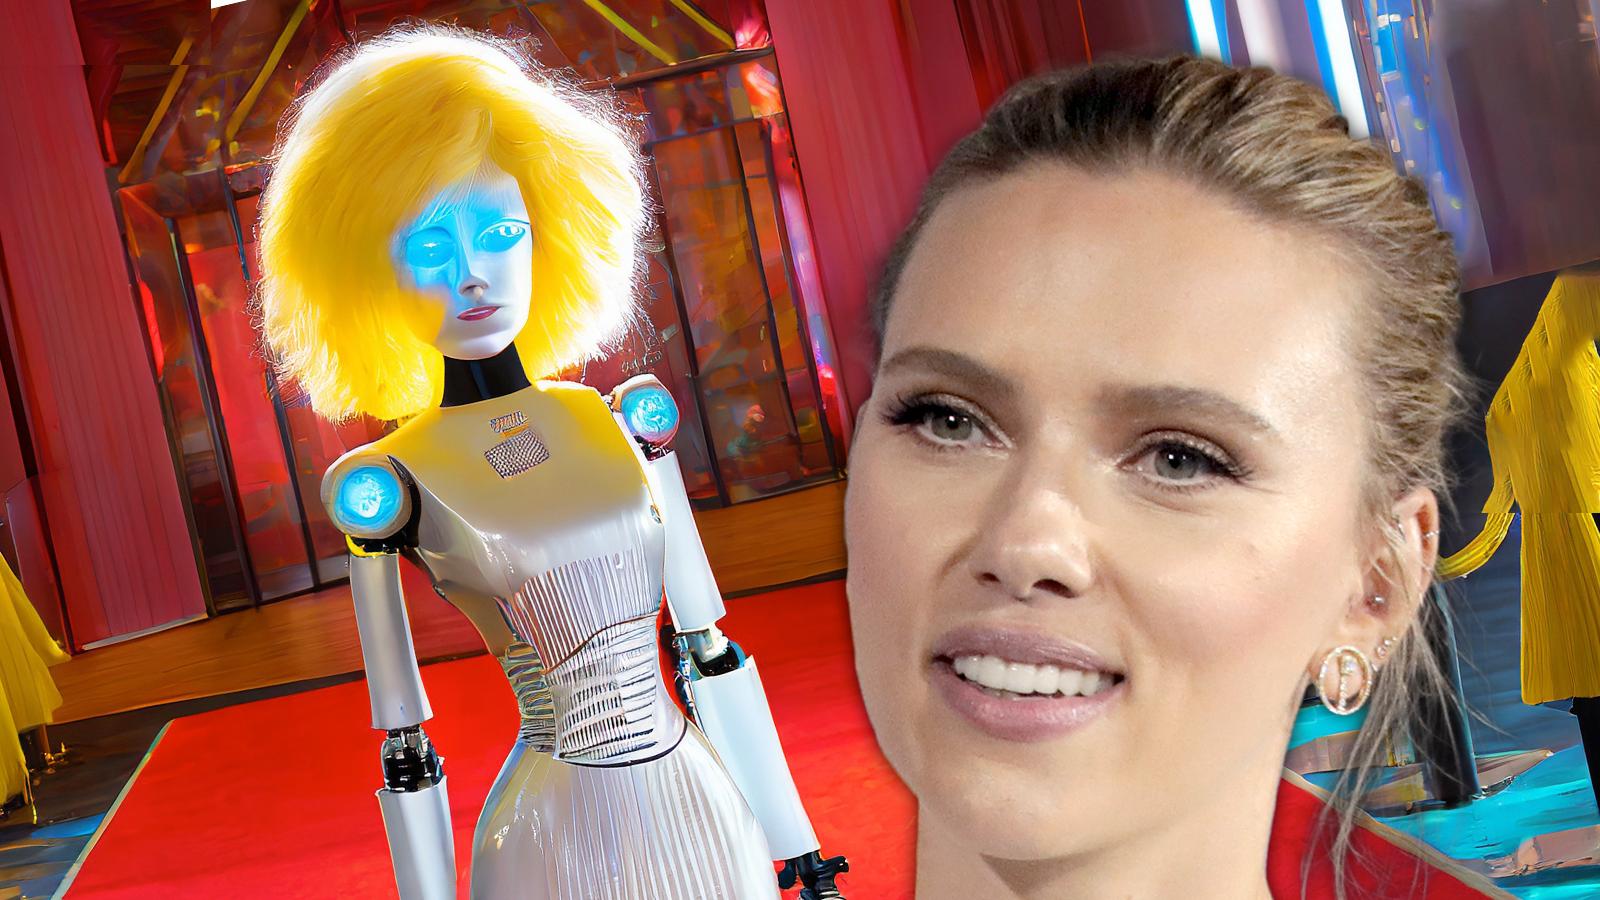 Scarlett Johansson takes legal action against use of image for AI, Scarlett  Johansson